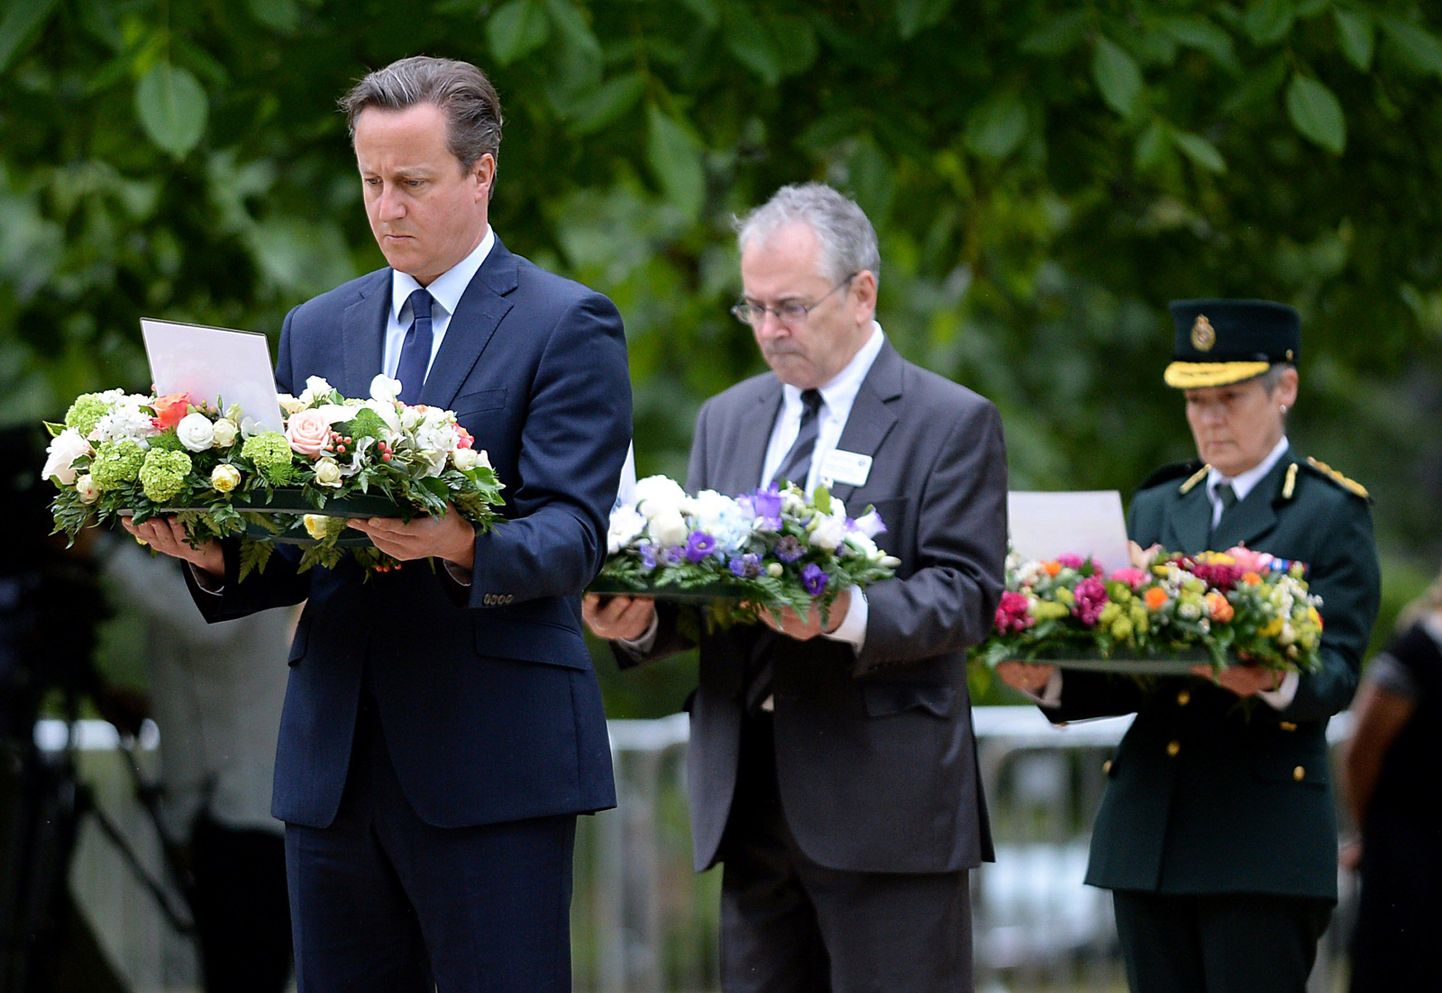 Briti peaminister David Cameron mälestuspärga asetamas.